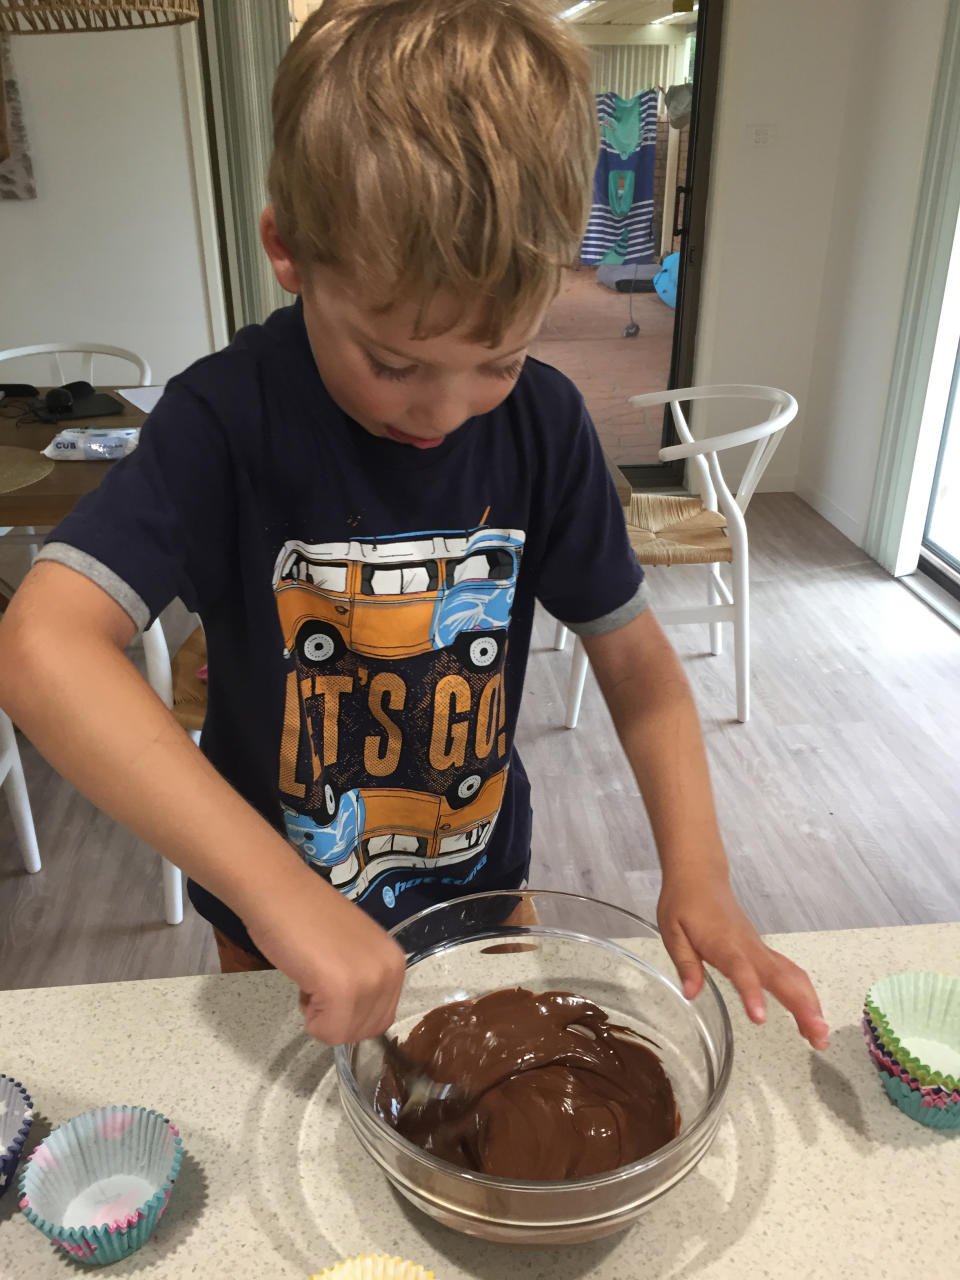 Young boy making a chocolate cake